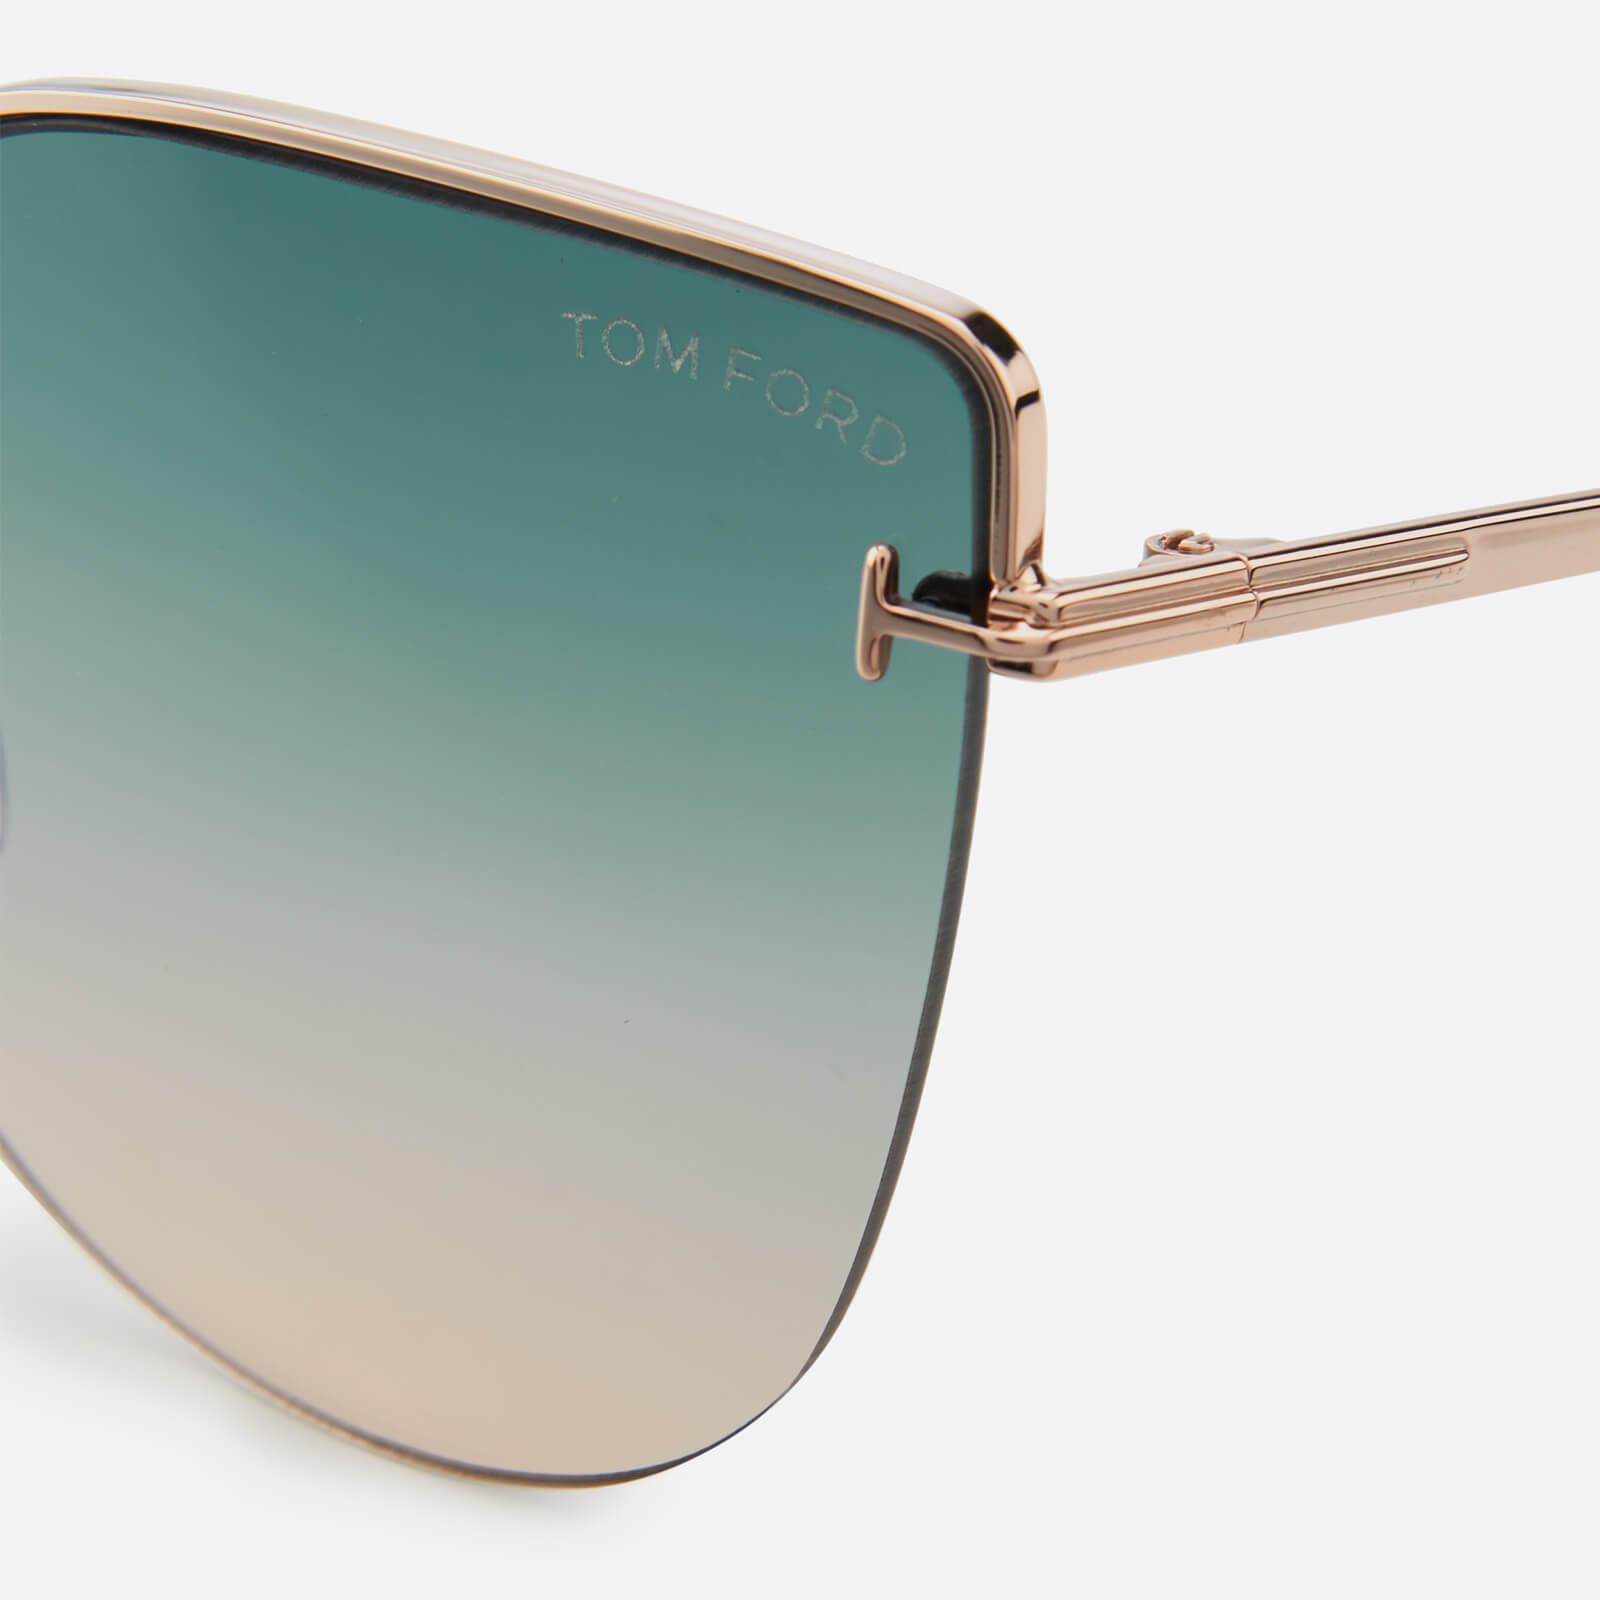 Tom Ford Ingrid 02 Sunglasses in Gold (Metallic) | Lyst